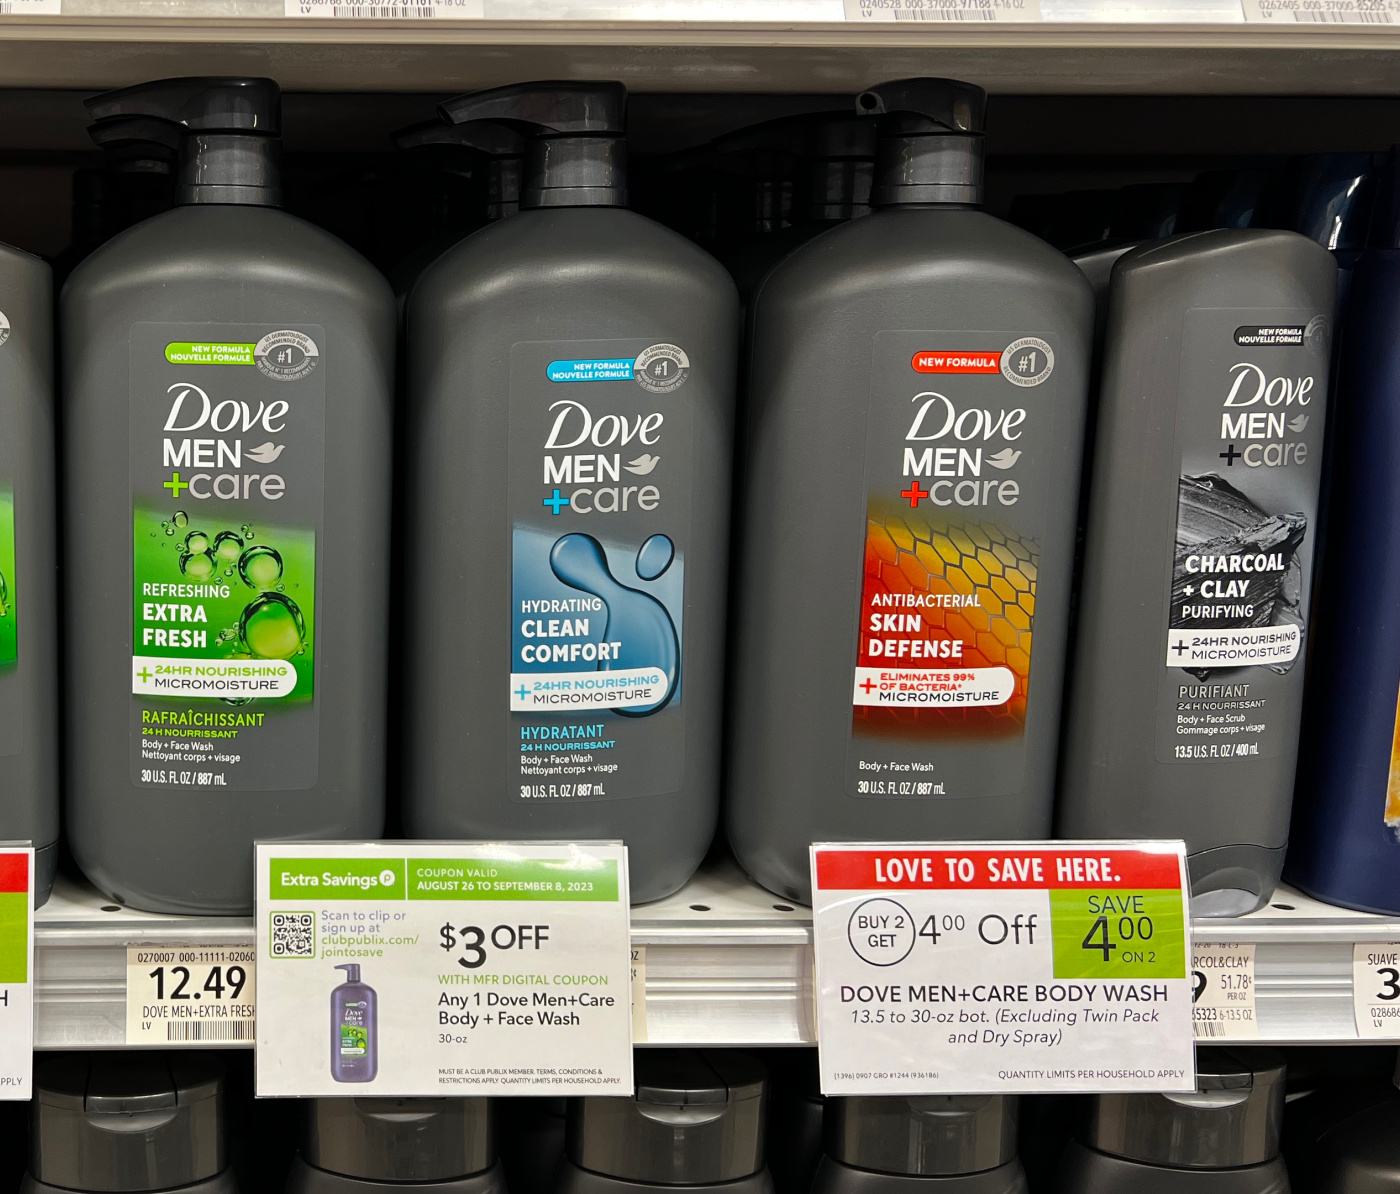 Get The Big Bottles Of Dove Men+Care Body Wash For Just $7.49 At Publix  (Regular Price $12.49) - iHeartPublix